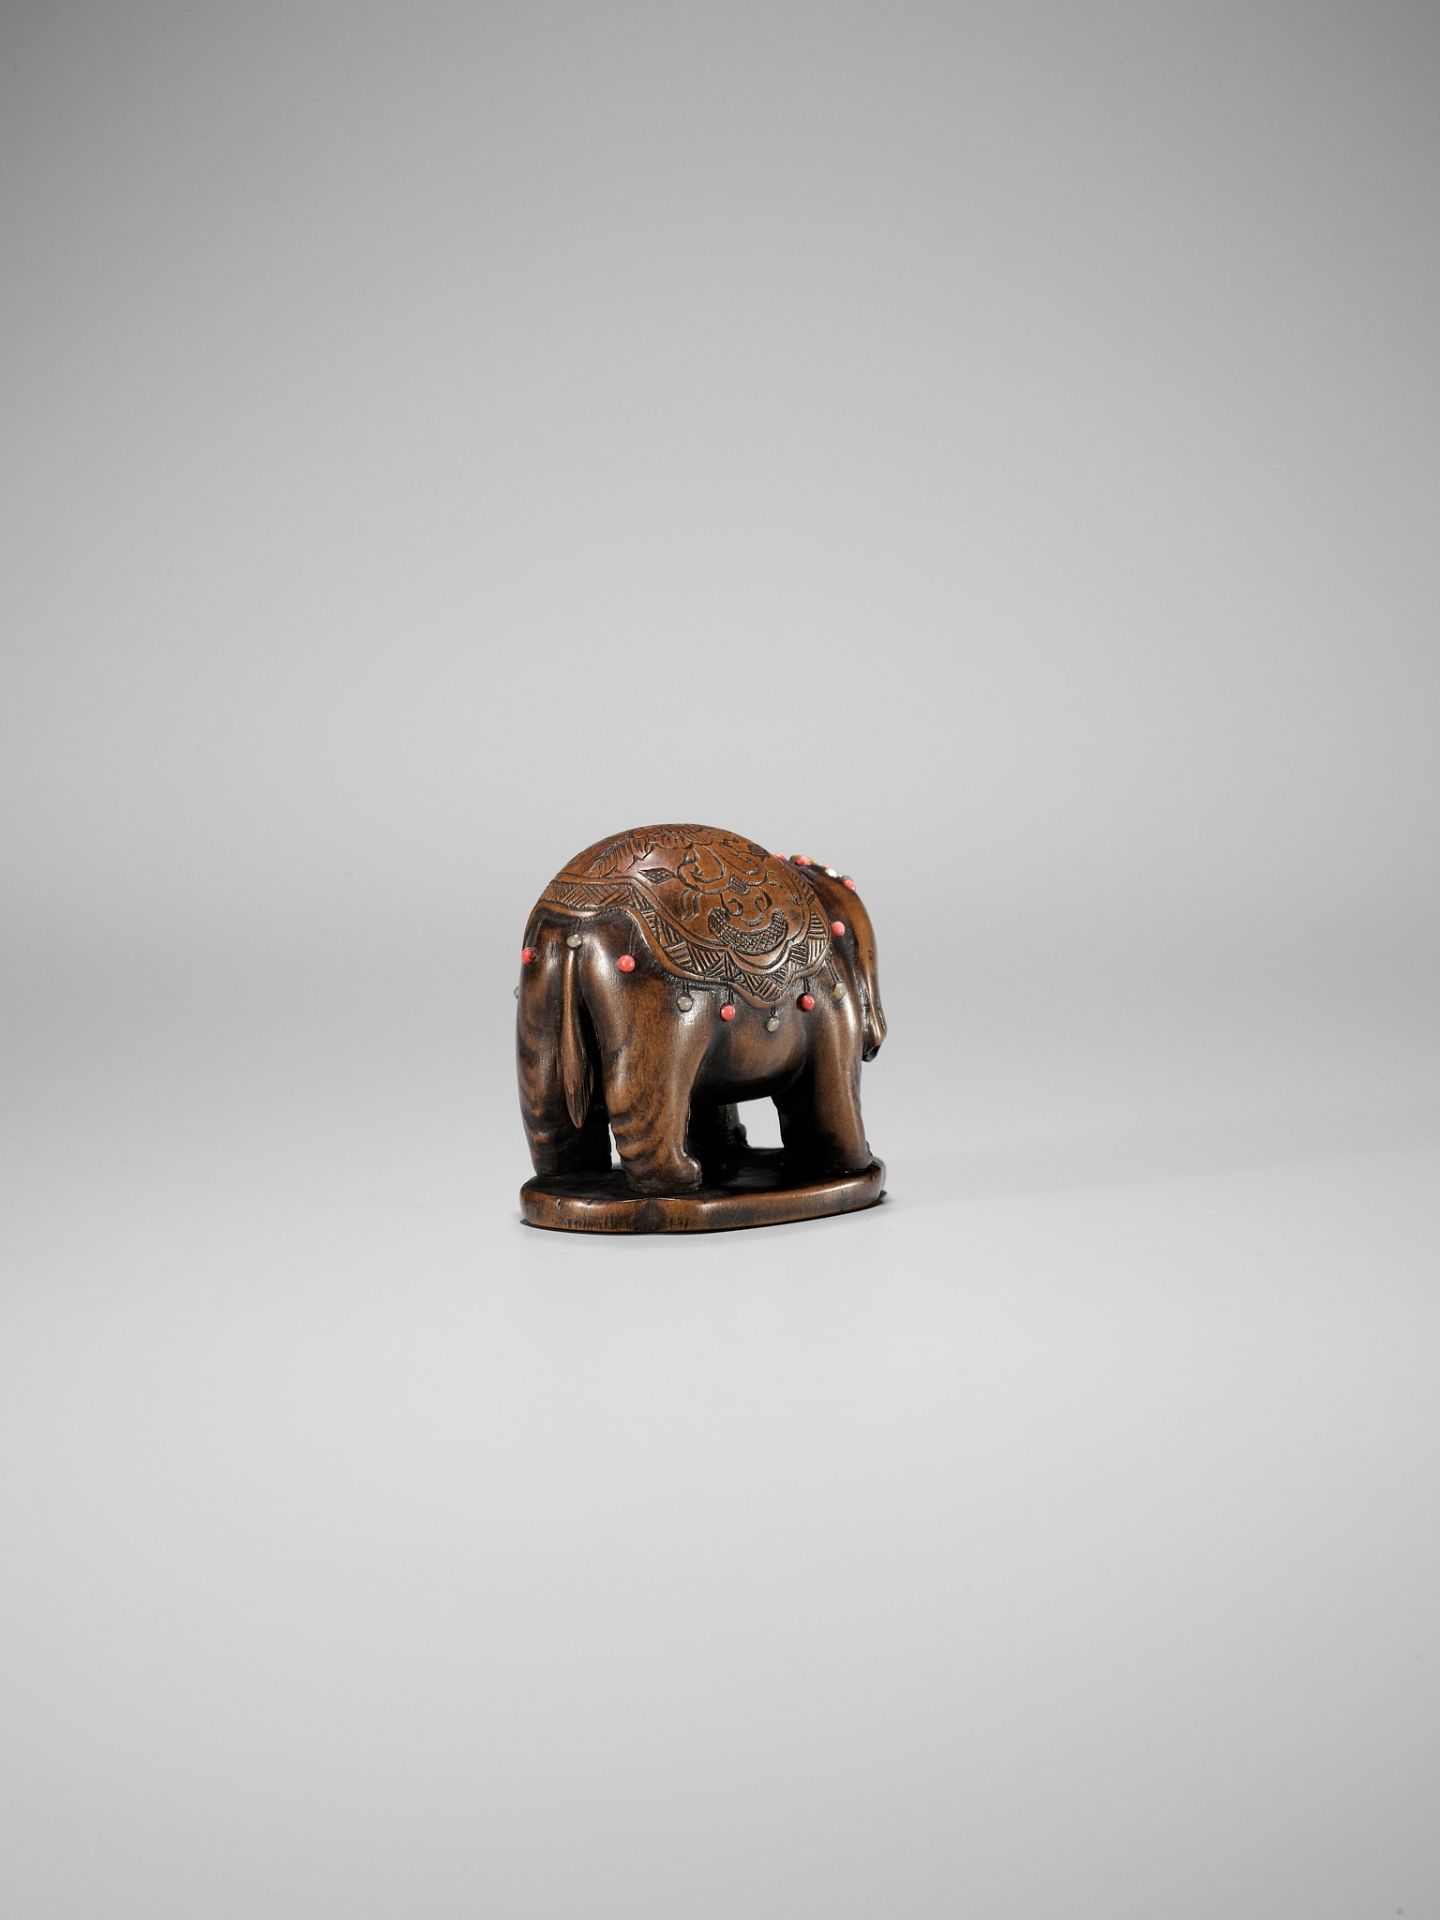 A RARE SHIBAYAMA-INLAID WOOD NETSUKE OF A CAPARISONED ELEPHANT - Image 5 of 9